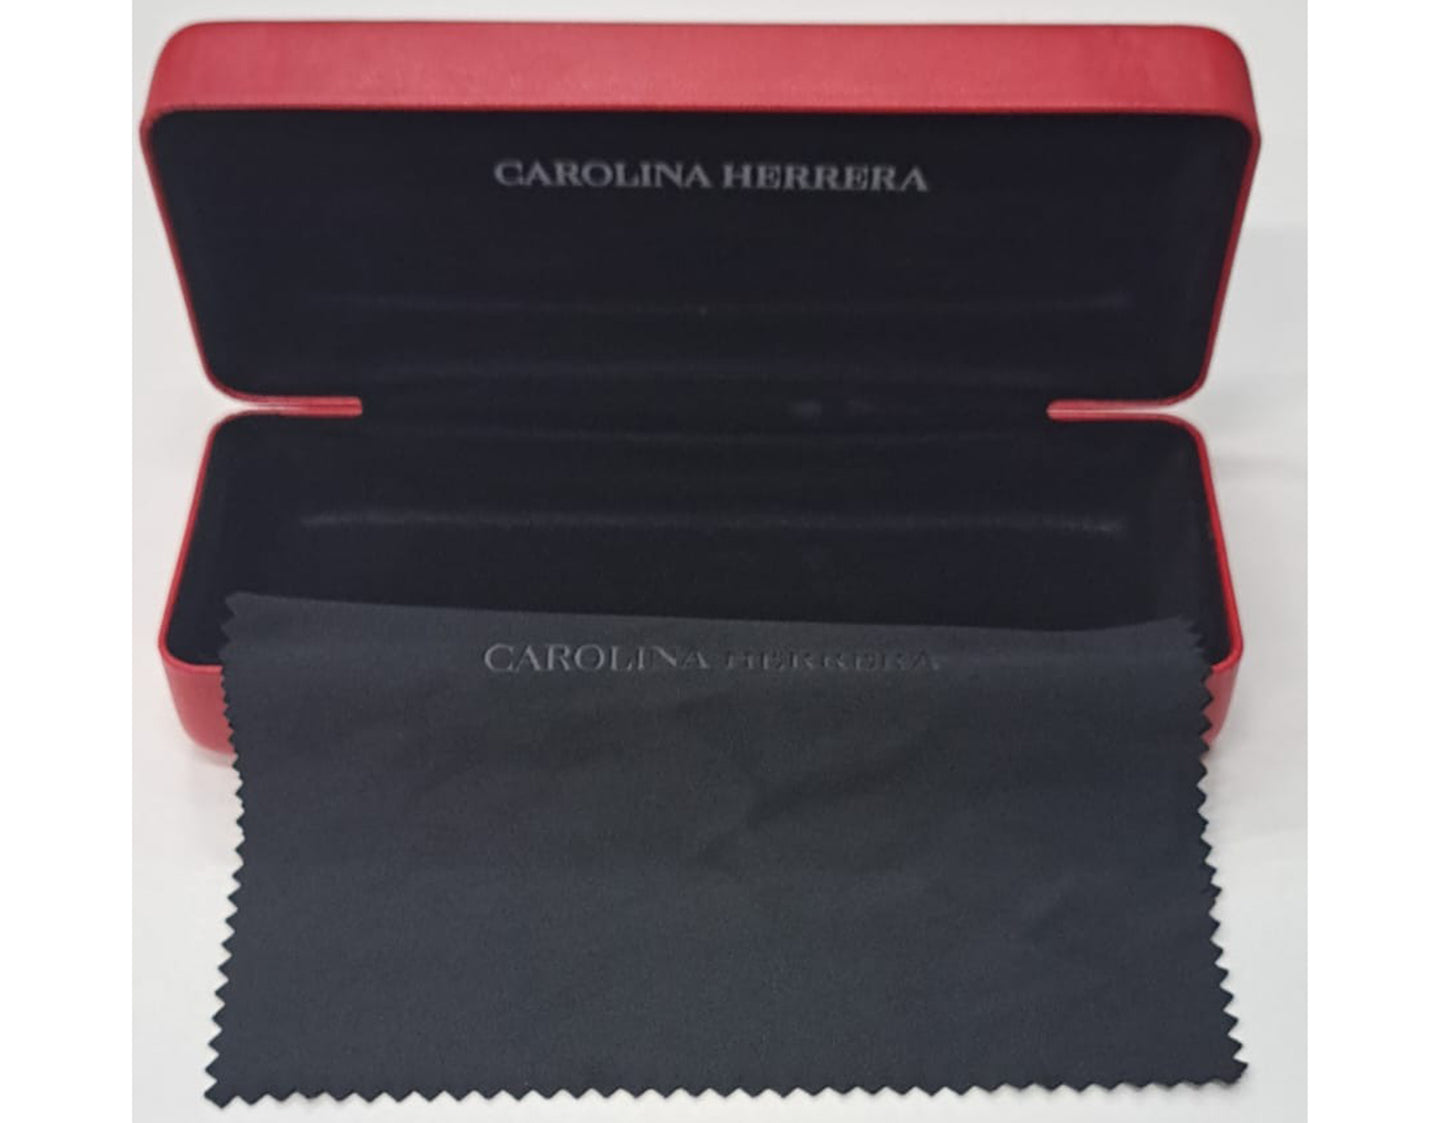 Carolina Herrera VHE817K-06YH-53 53mm New Eyeglasses